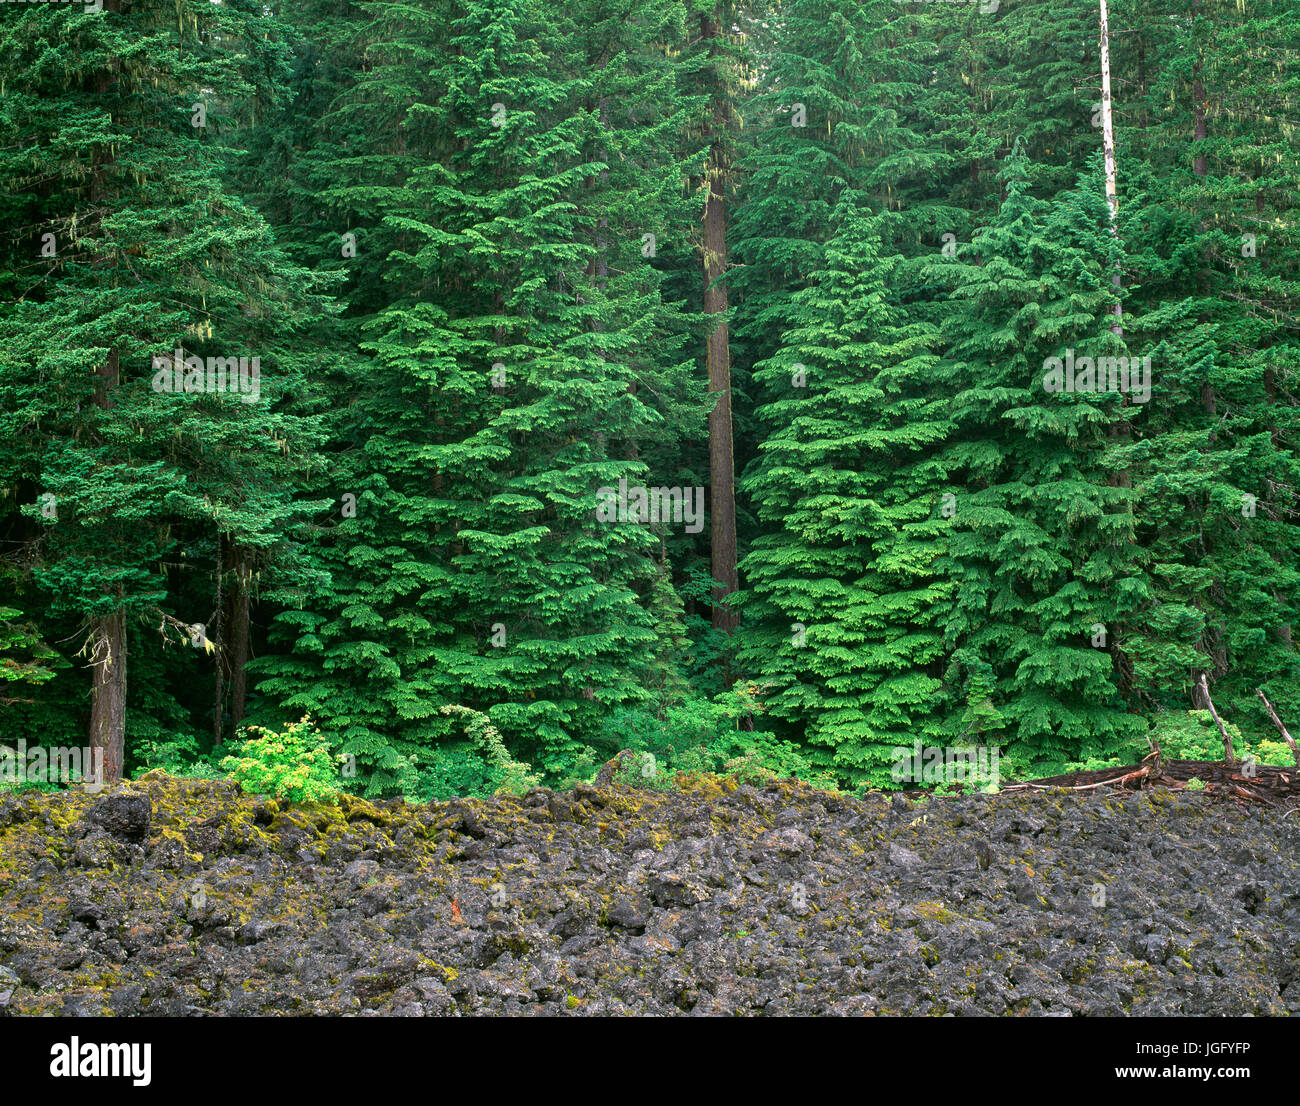 USA, Oregon, Willamette National Forest, Douglas fir and western hemlock trees grow alongside margin of old lava flow. Stock Photo